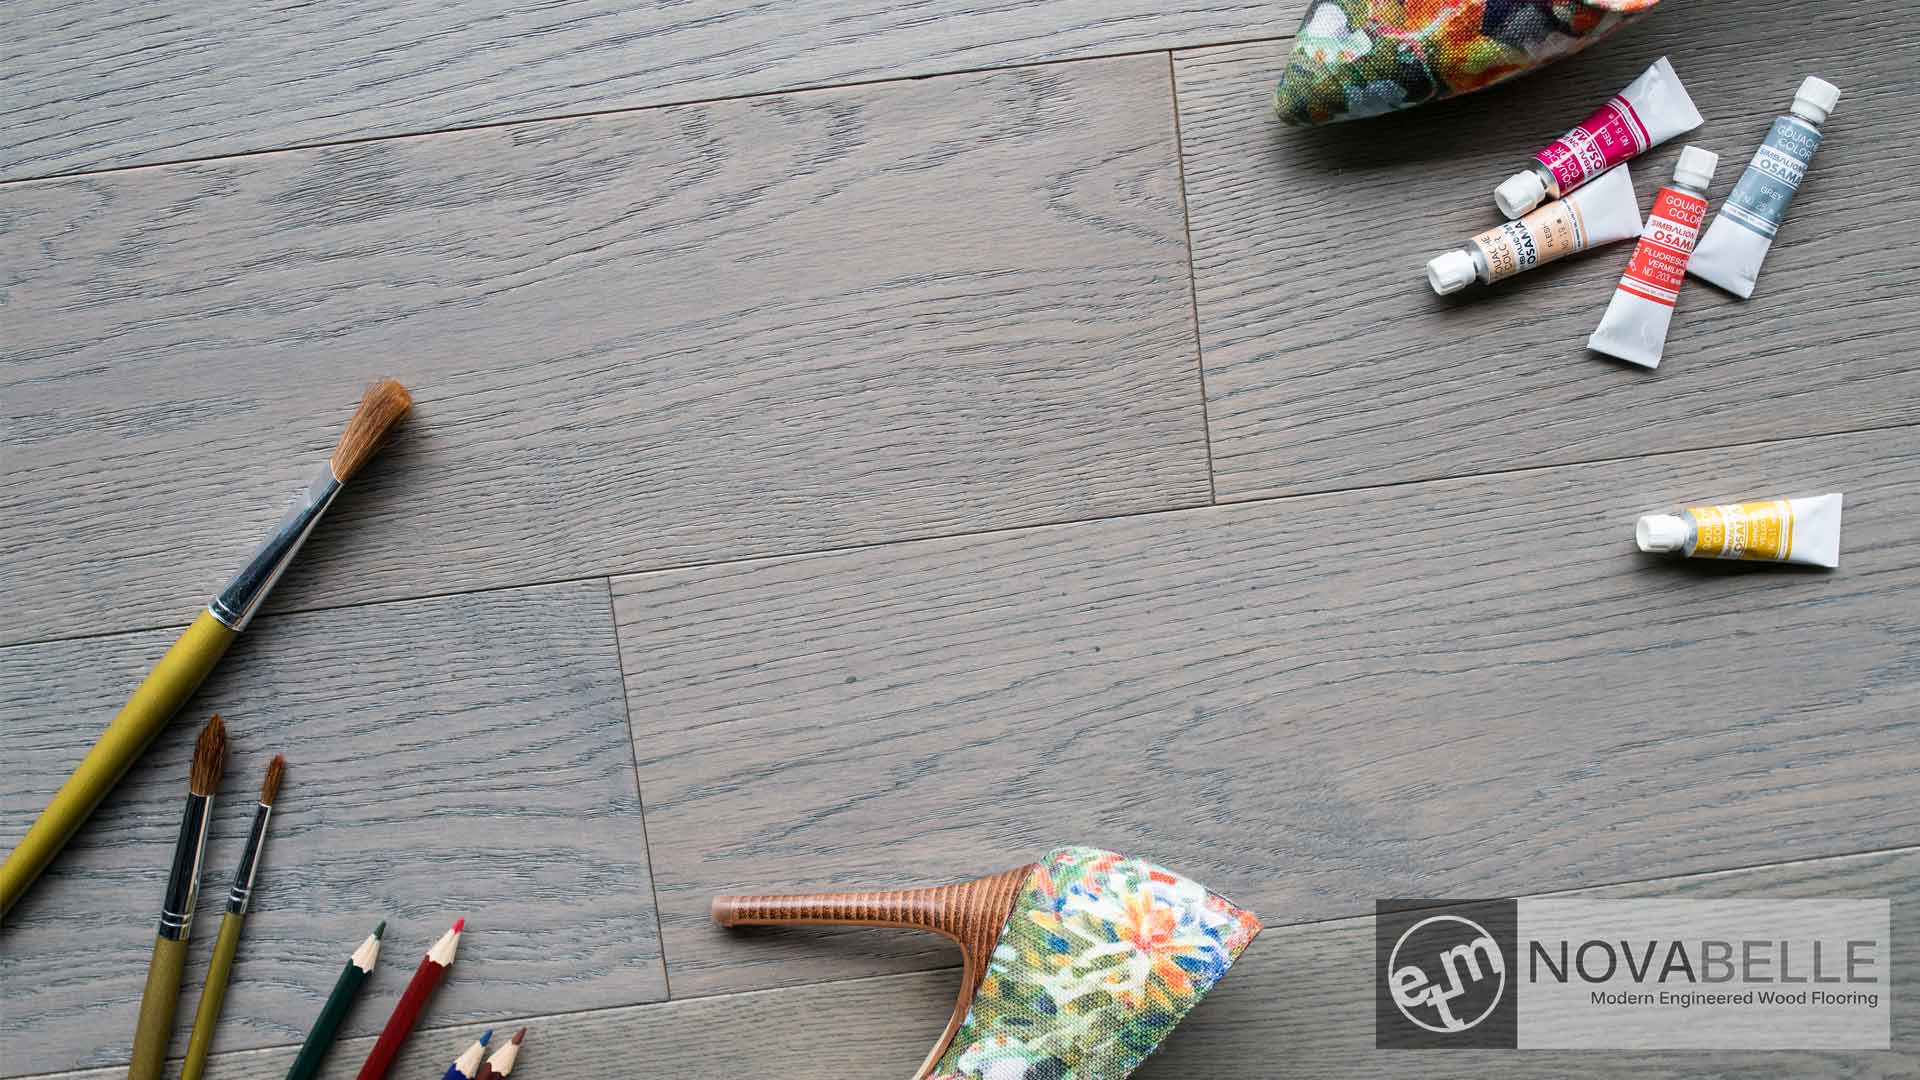 ETM Novabelle Classic Engineered Hardwood Flooring